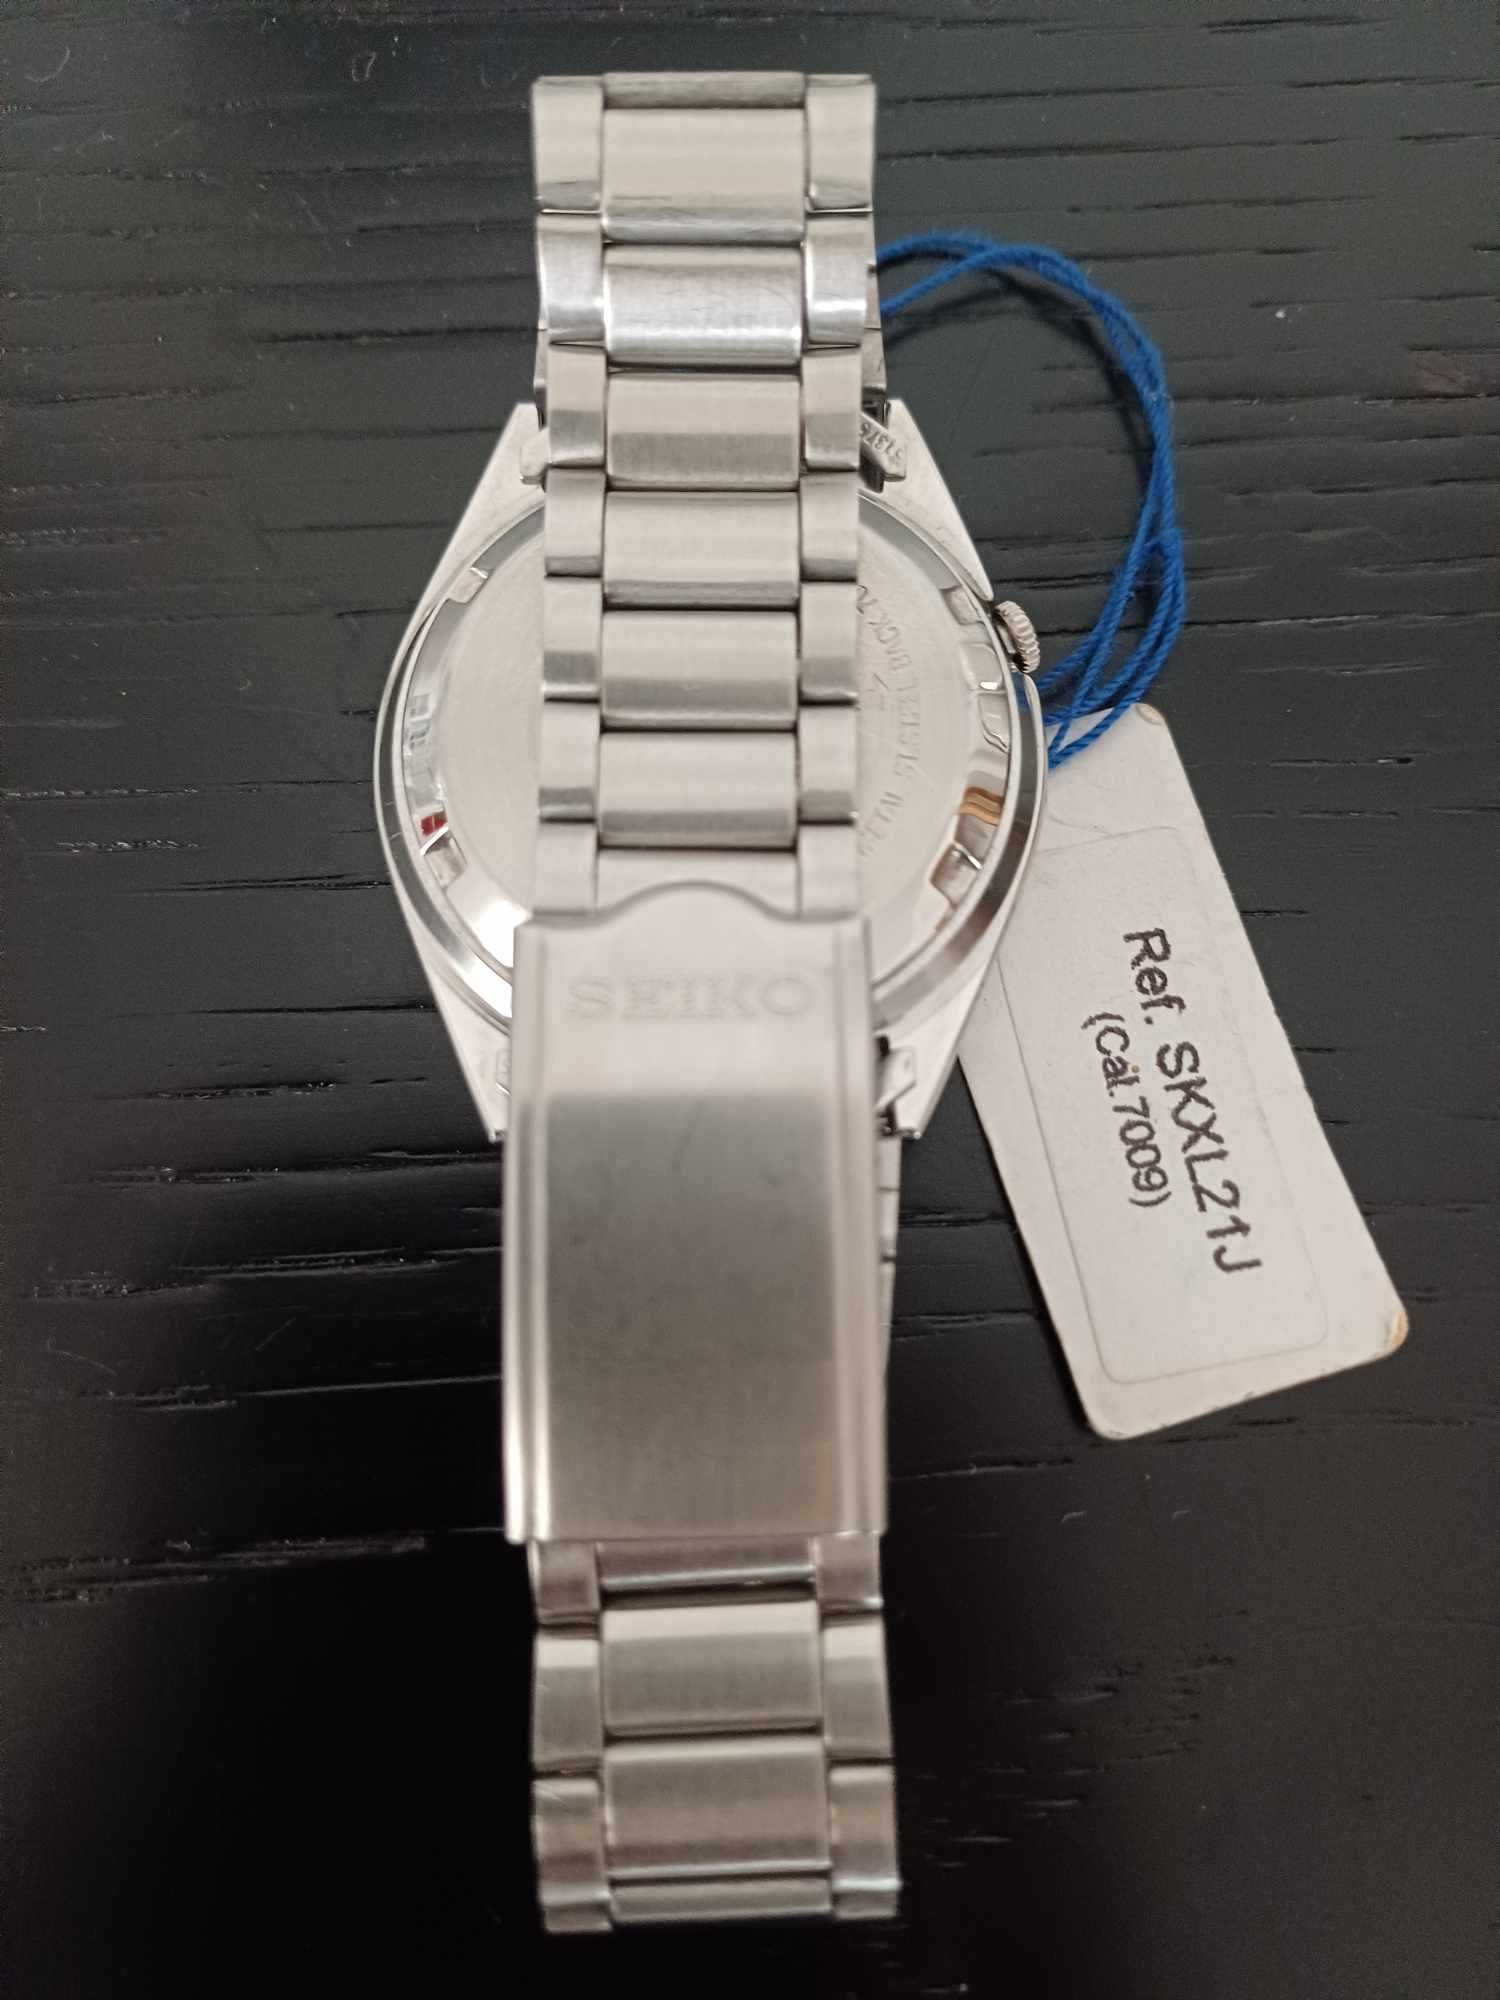 Relógio de Pulso Automático (Seiko 5 - SKXL21J)